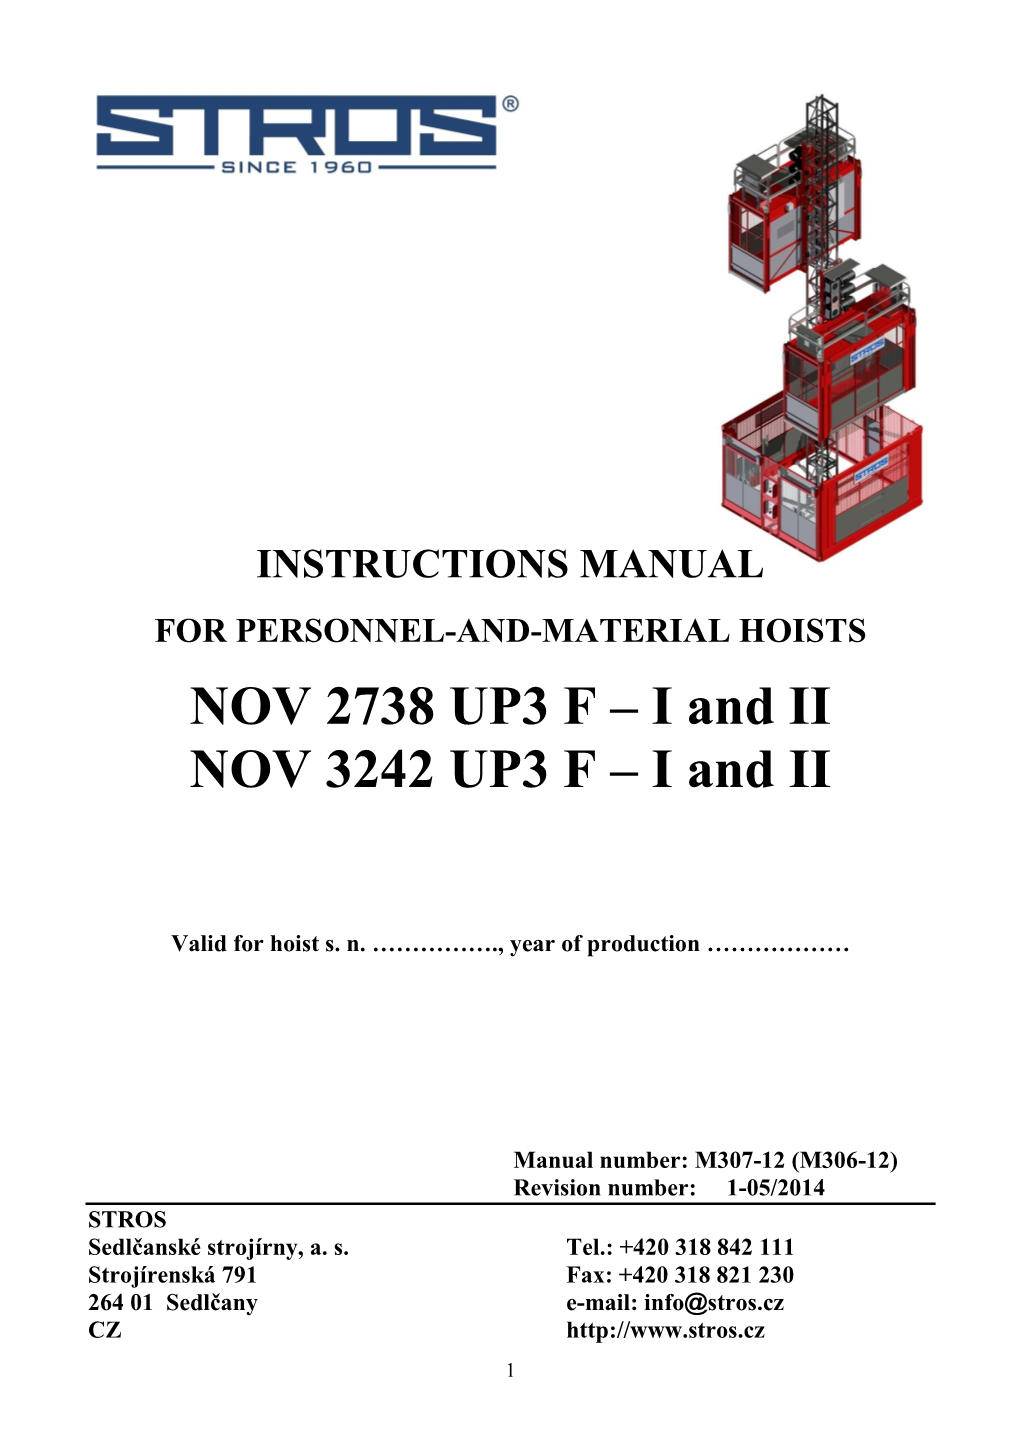 STROS 7000 – Full Instructions Manual